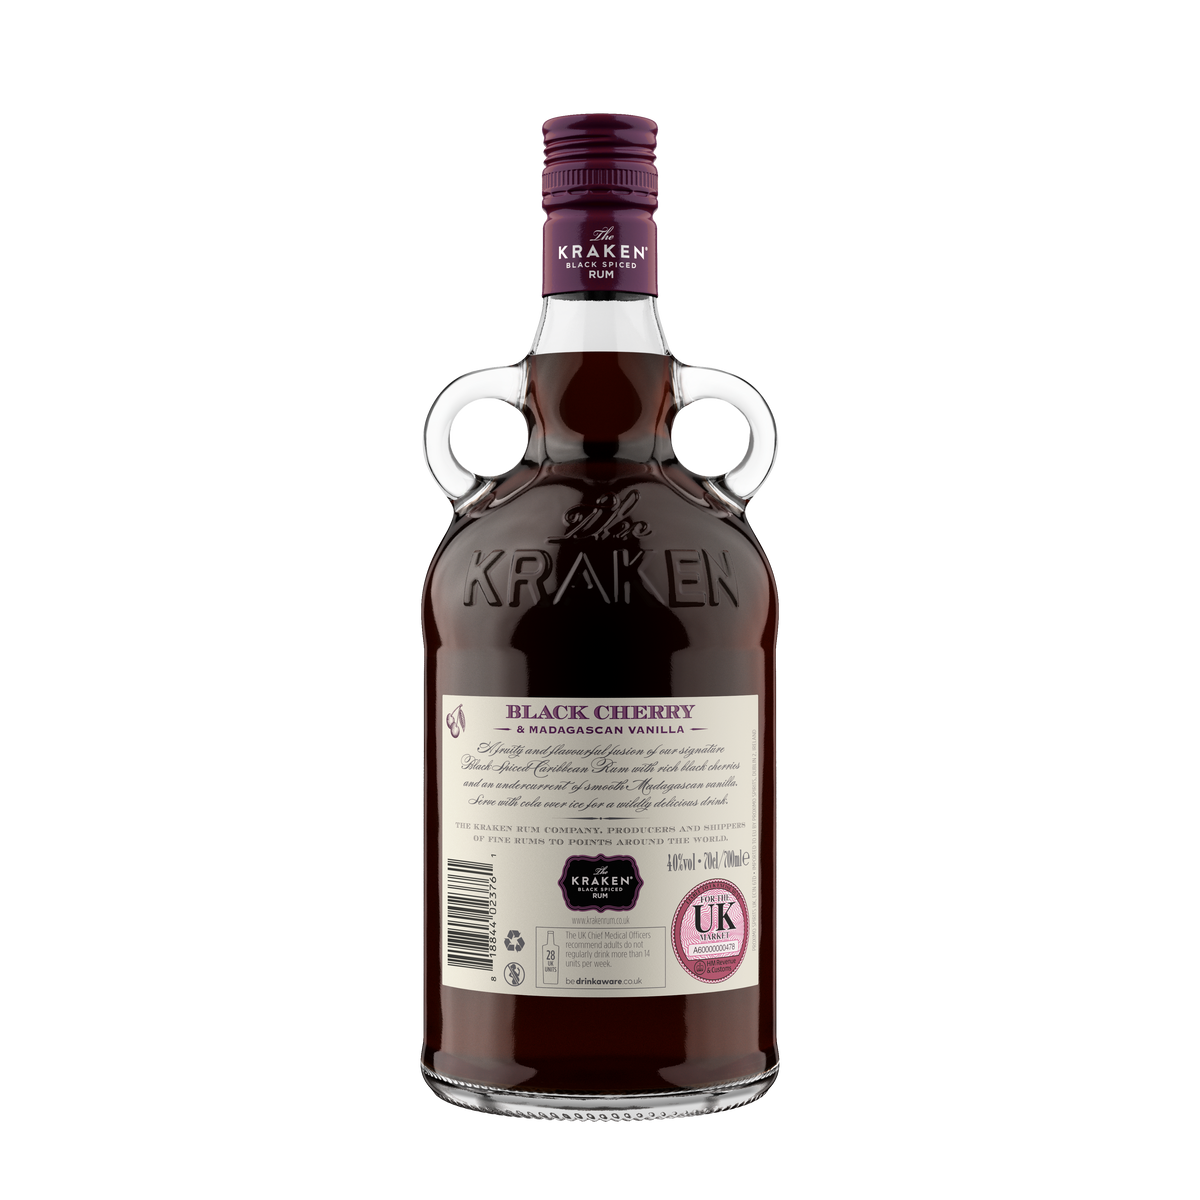 The Kraken Black Cherry Rum Spiced of Black and – 70cl Madagascan House Spirits Vanilla